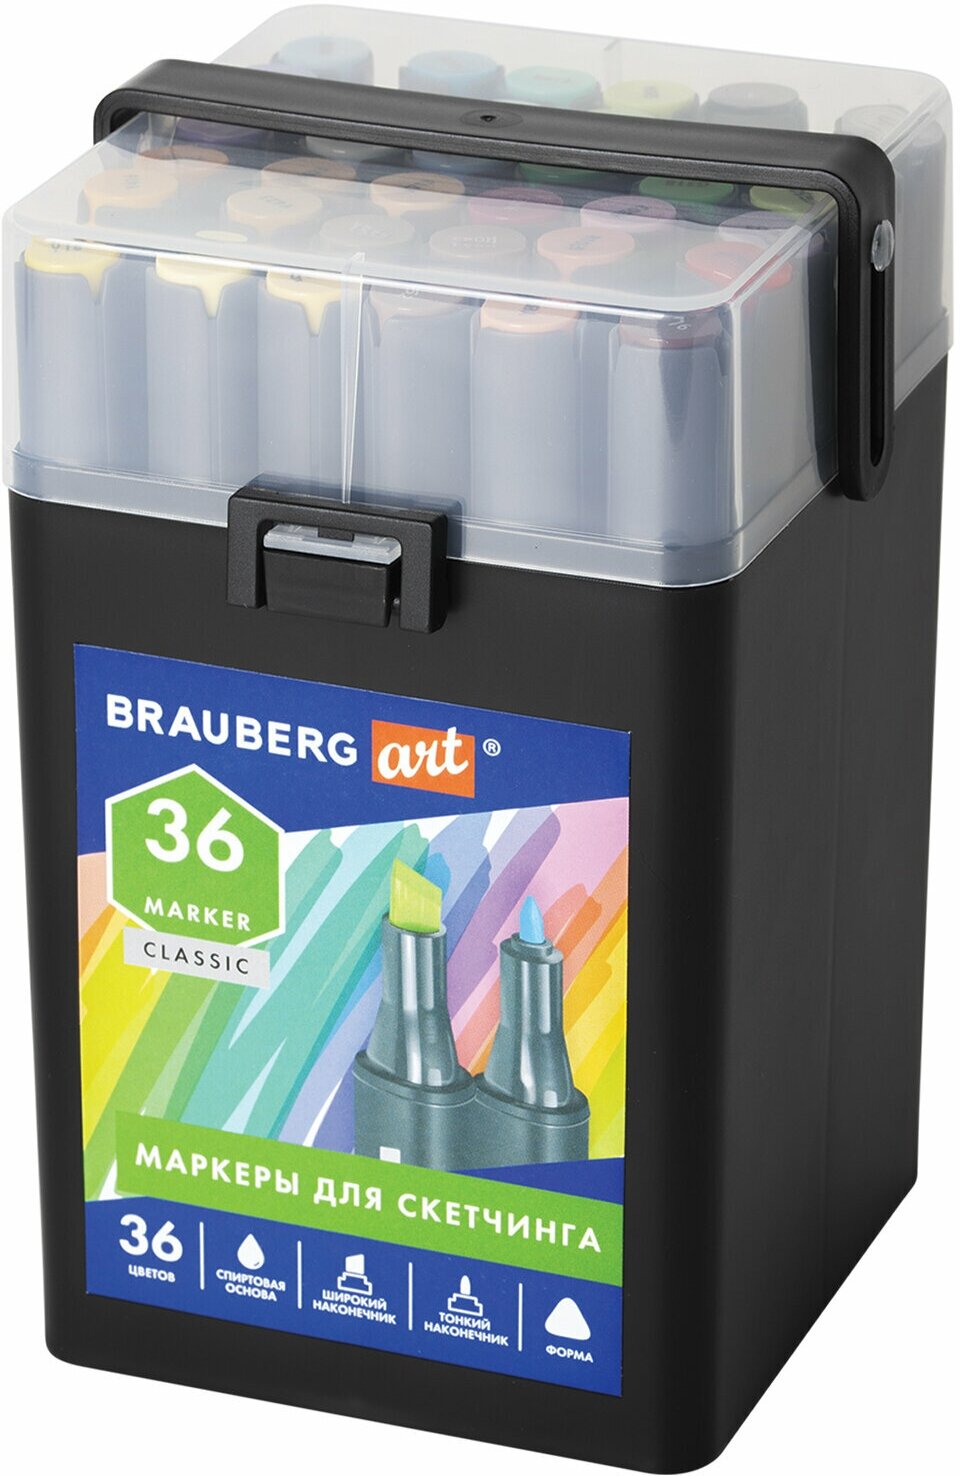 Маркеры для скетчинга двусторонние BRAUBERG ART CLASSIC, набор 36 шт, базовые цвета, кейс, 152145